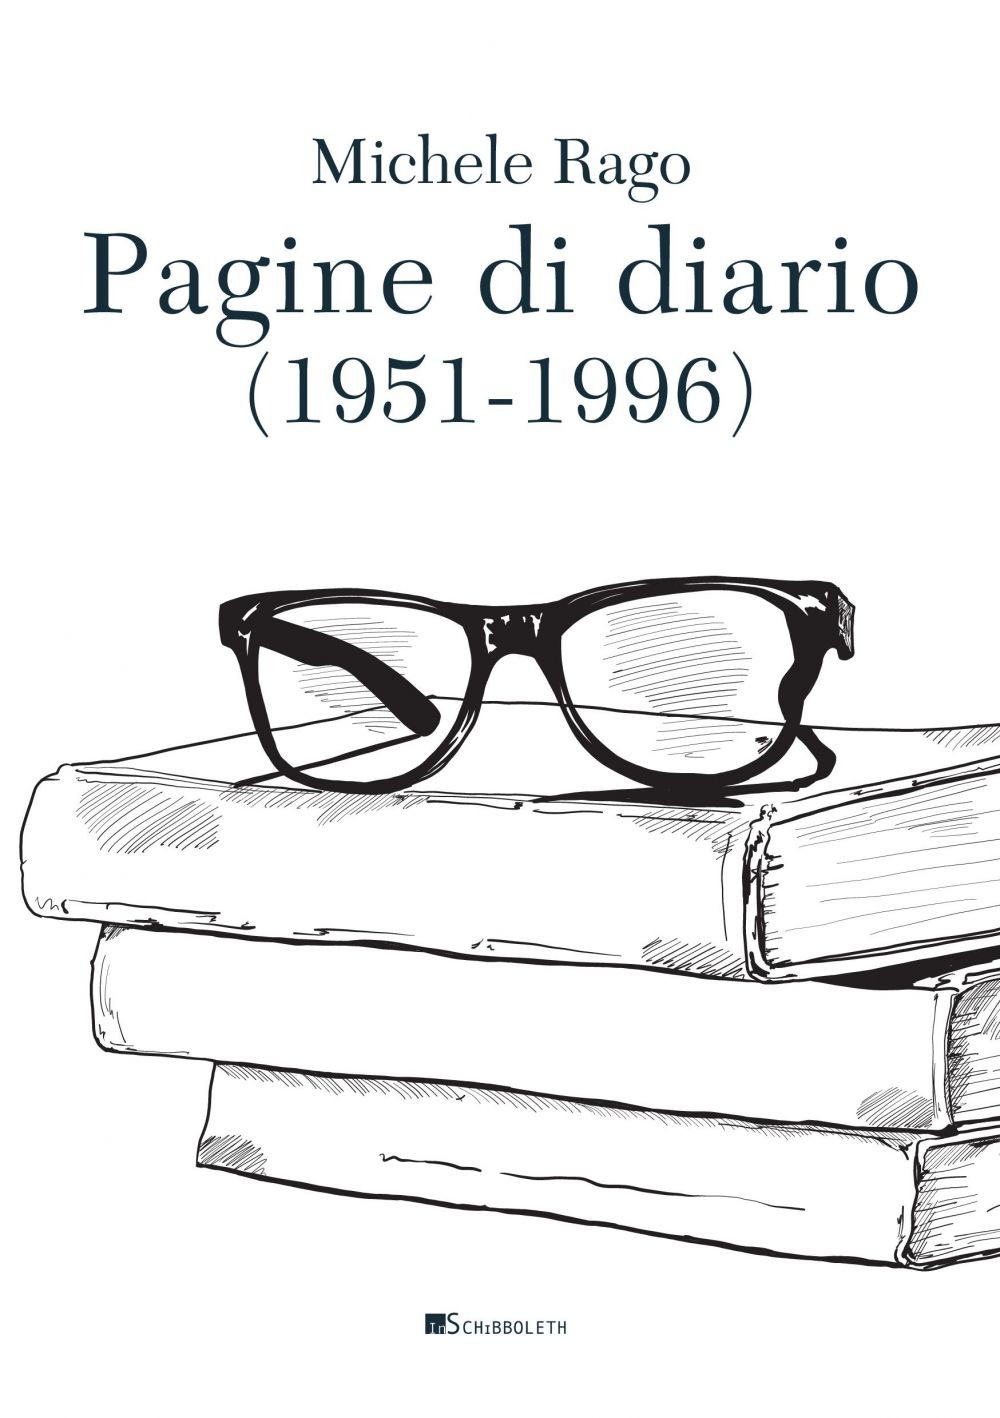 Pagine di diario (1951-1996) - Librerie.coop